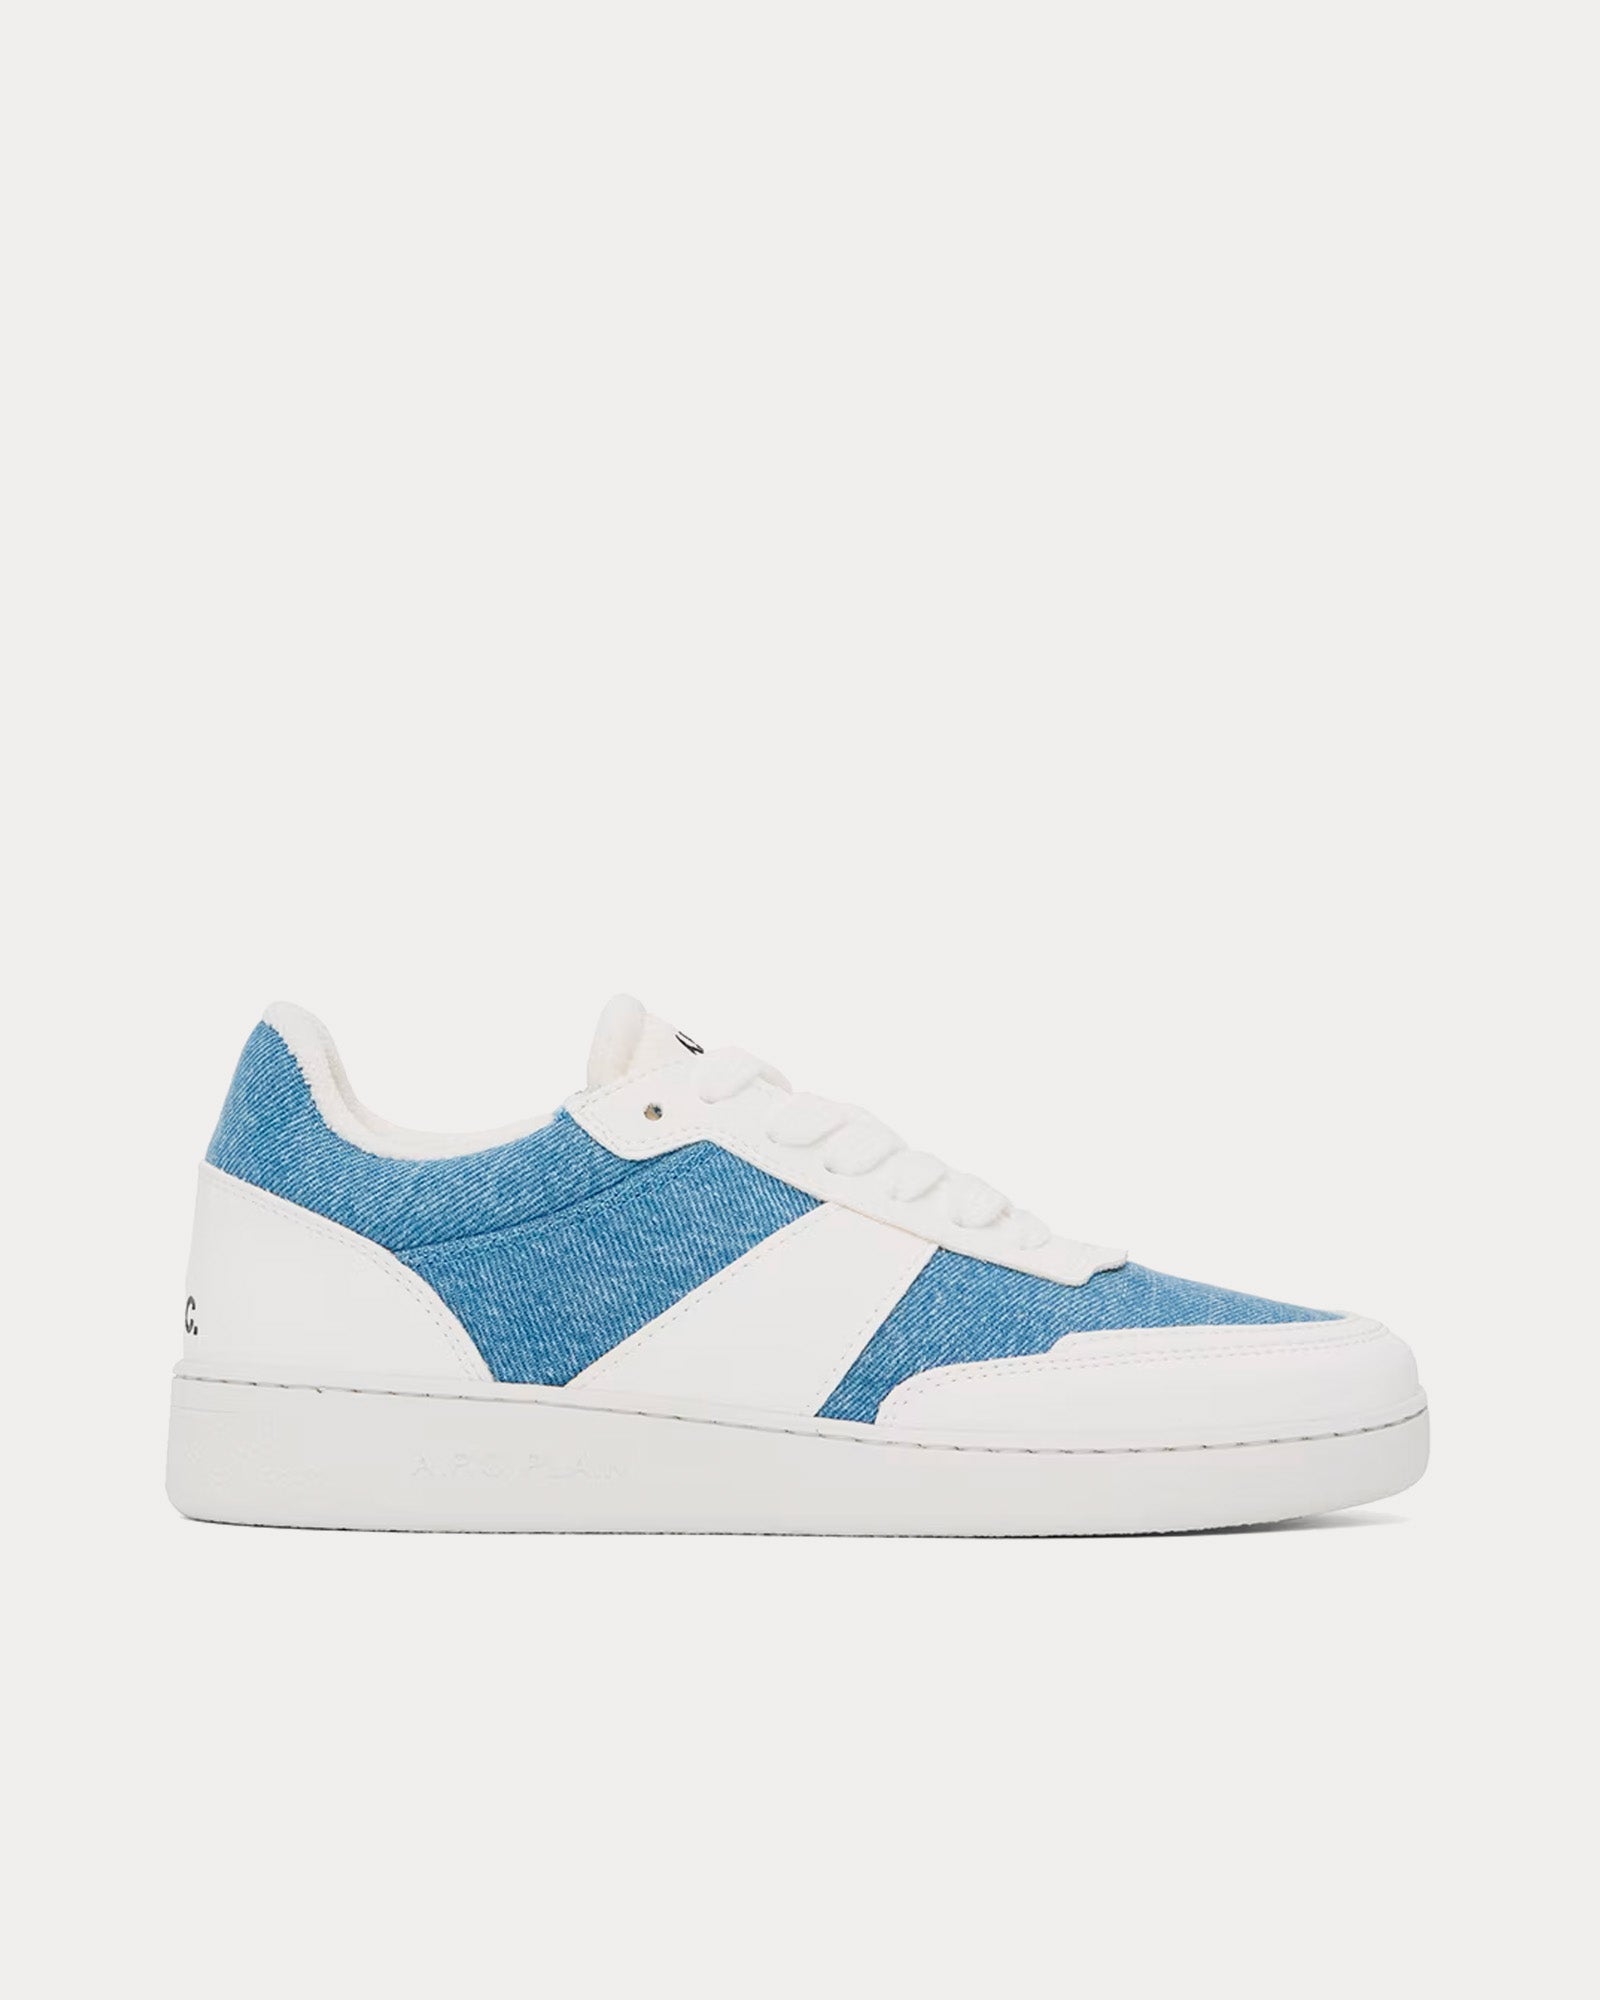 A.P.C. - Plain White / Light Blue Low Top Sneakers